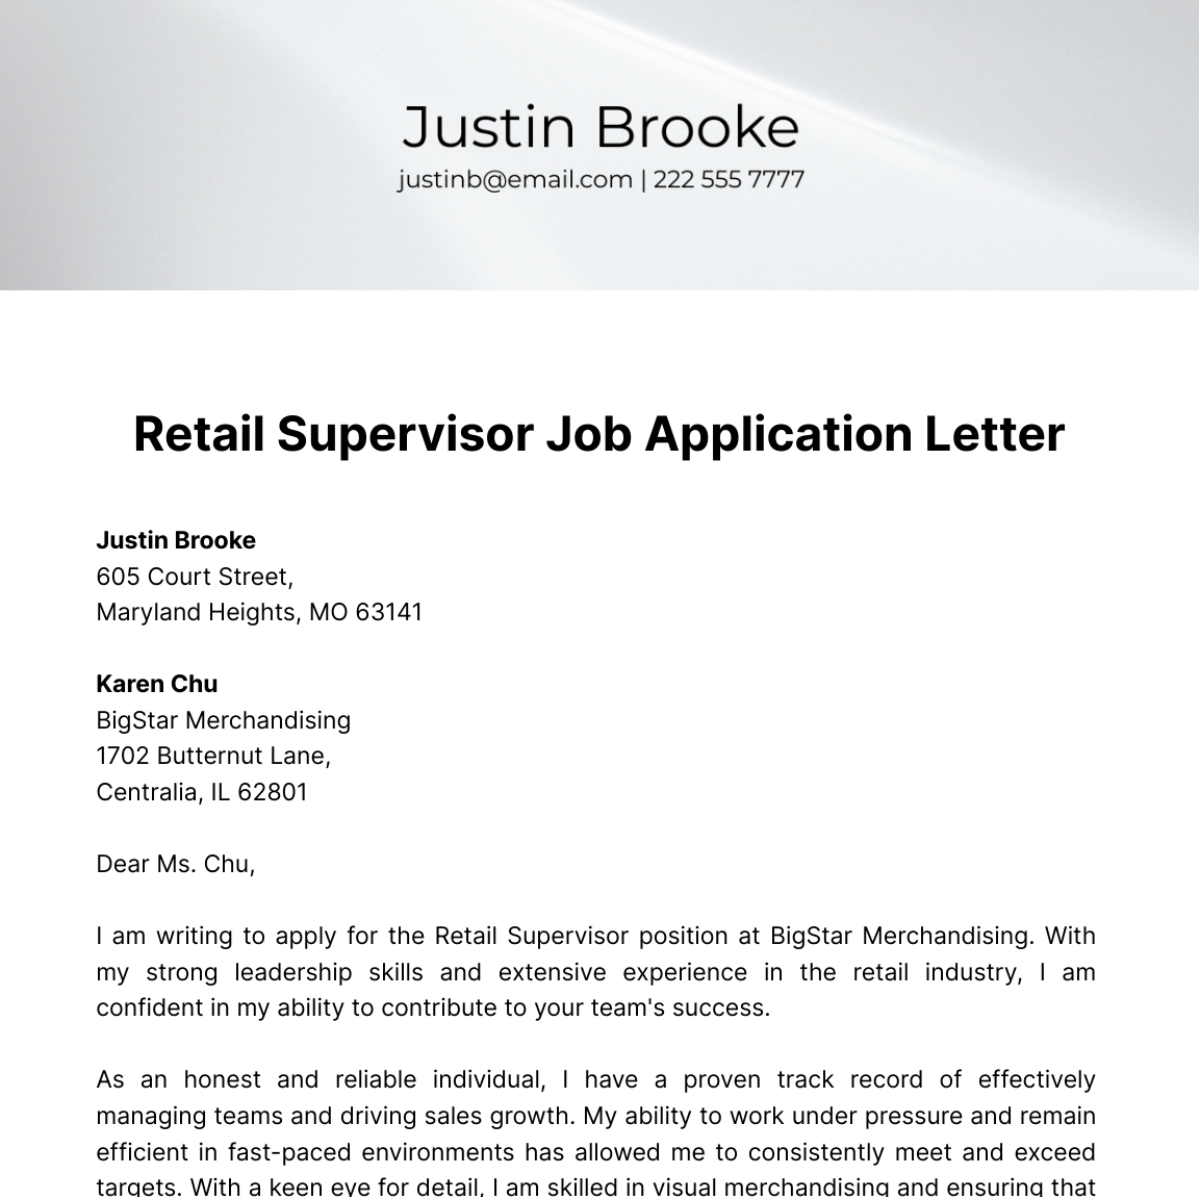 Retail Supervisor Job Application Letter  Template